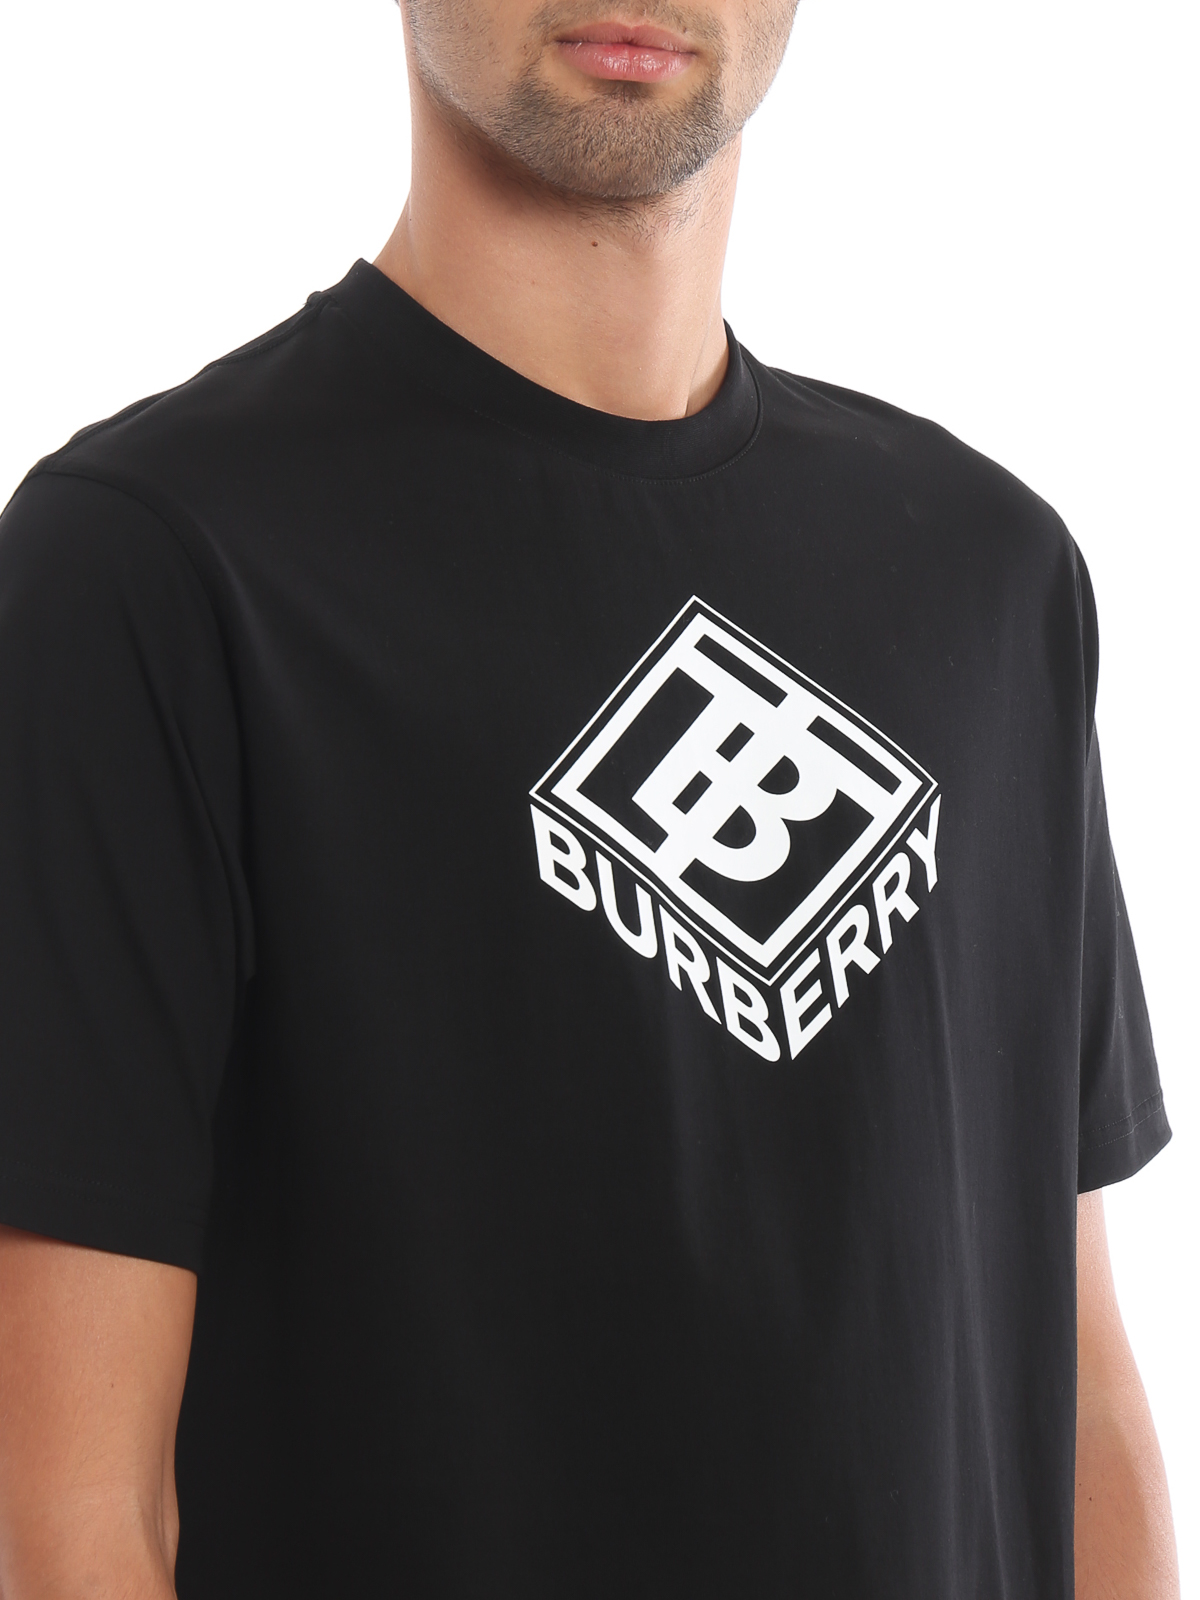 Tシャツ Burberry - Tシャツ - Ellison - 8021831 | iKRIX shop online